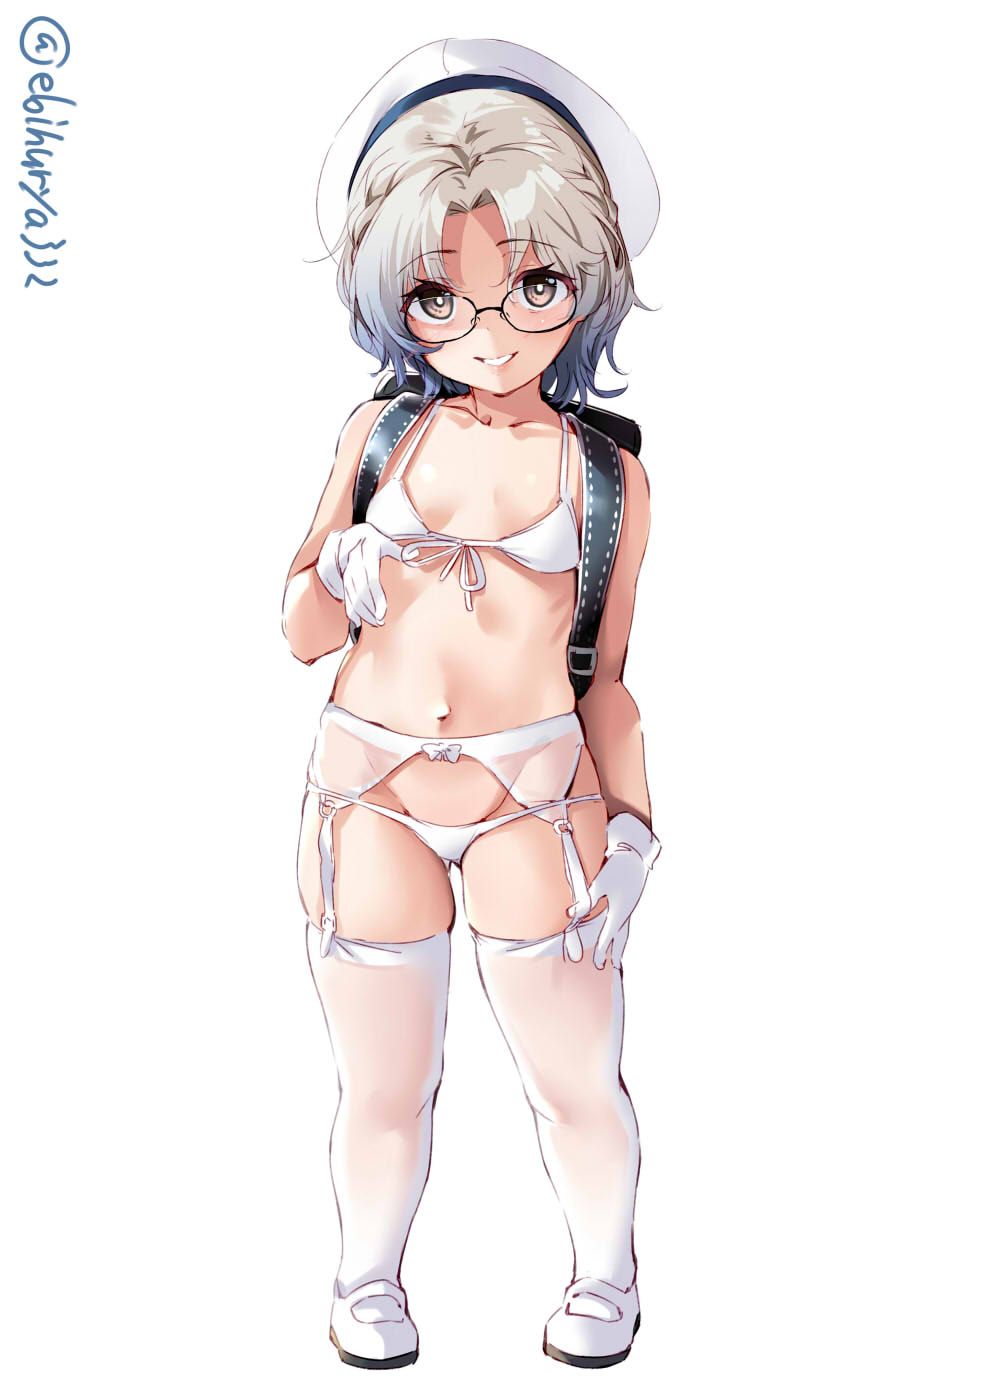 [Hirado-chan (ship this)] secondary erotic image of the lori glasses daughter kaido ship Hirado of fleet collection 2